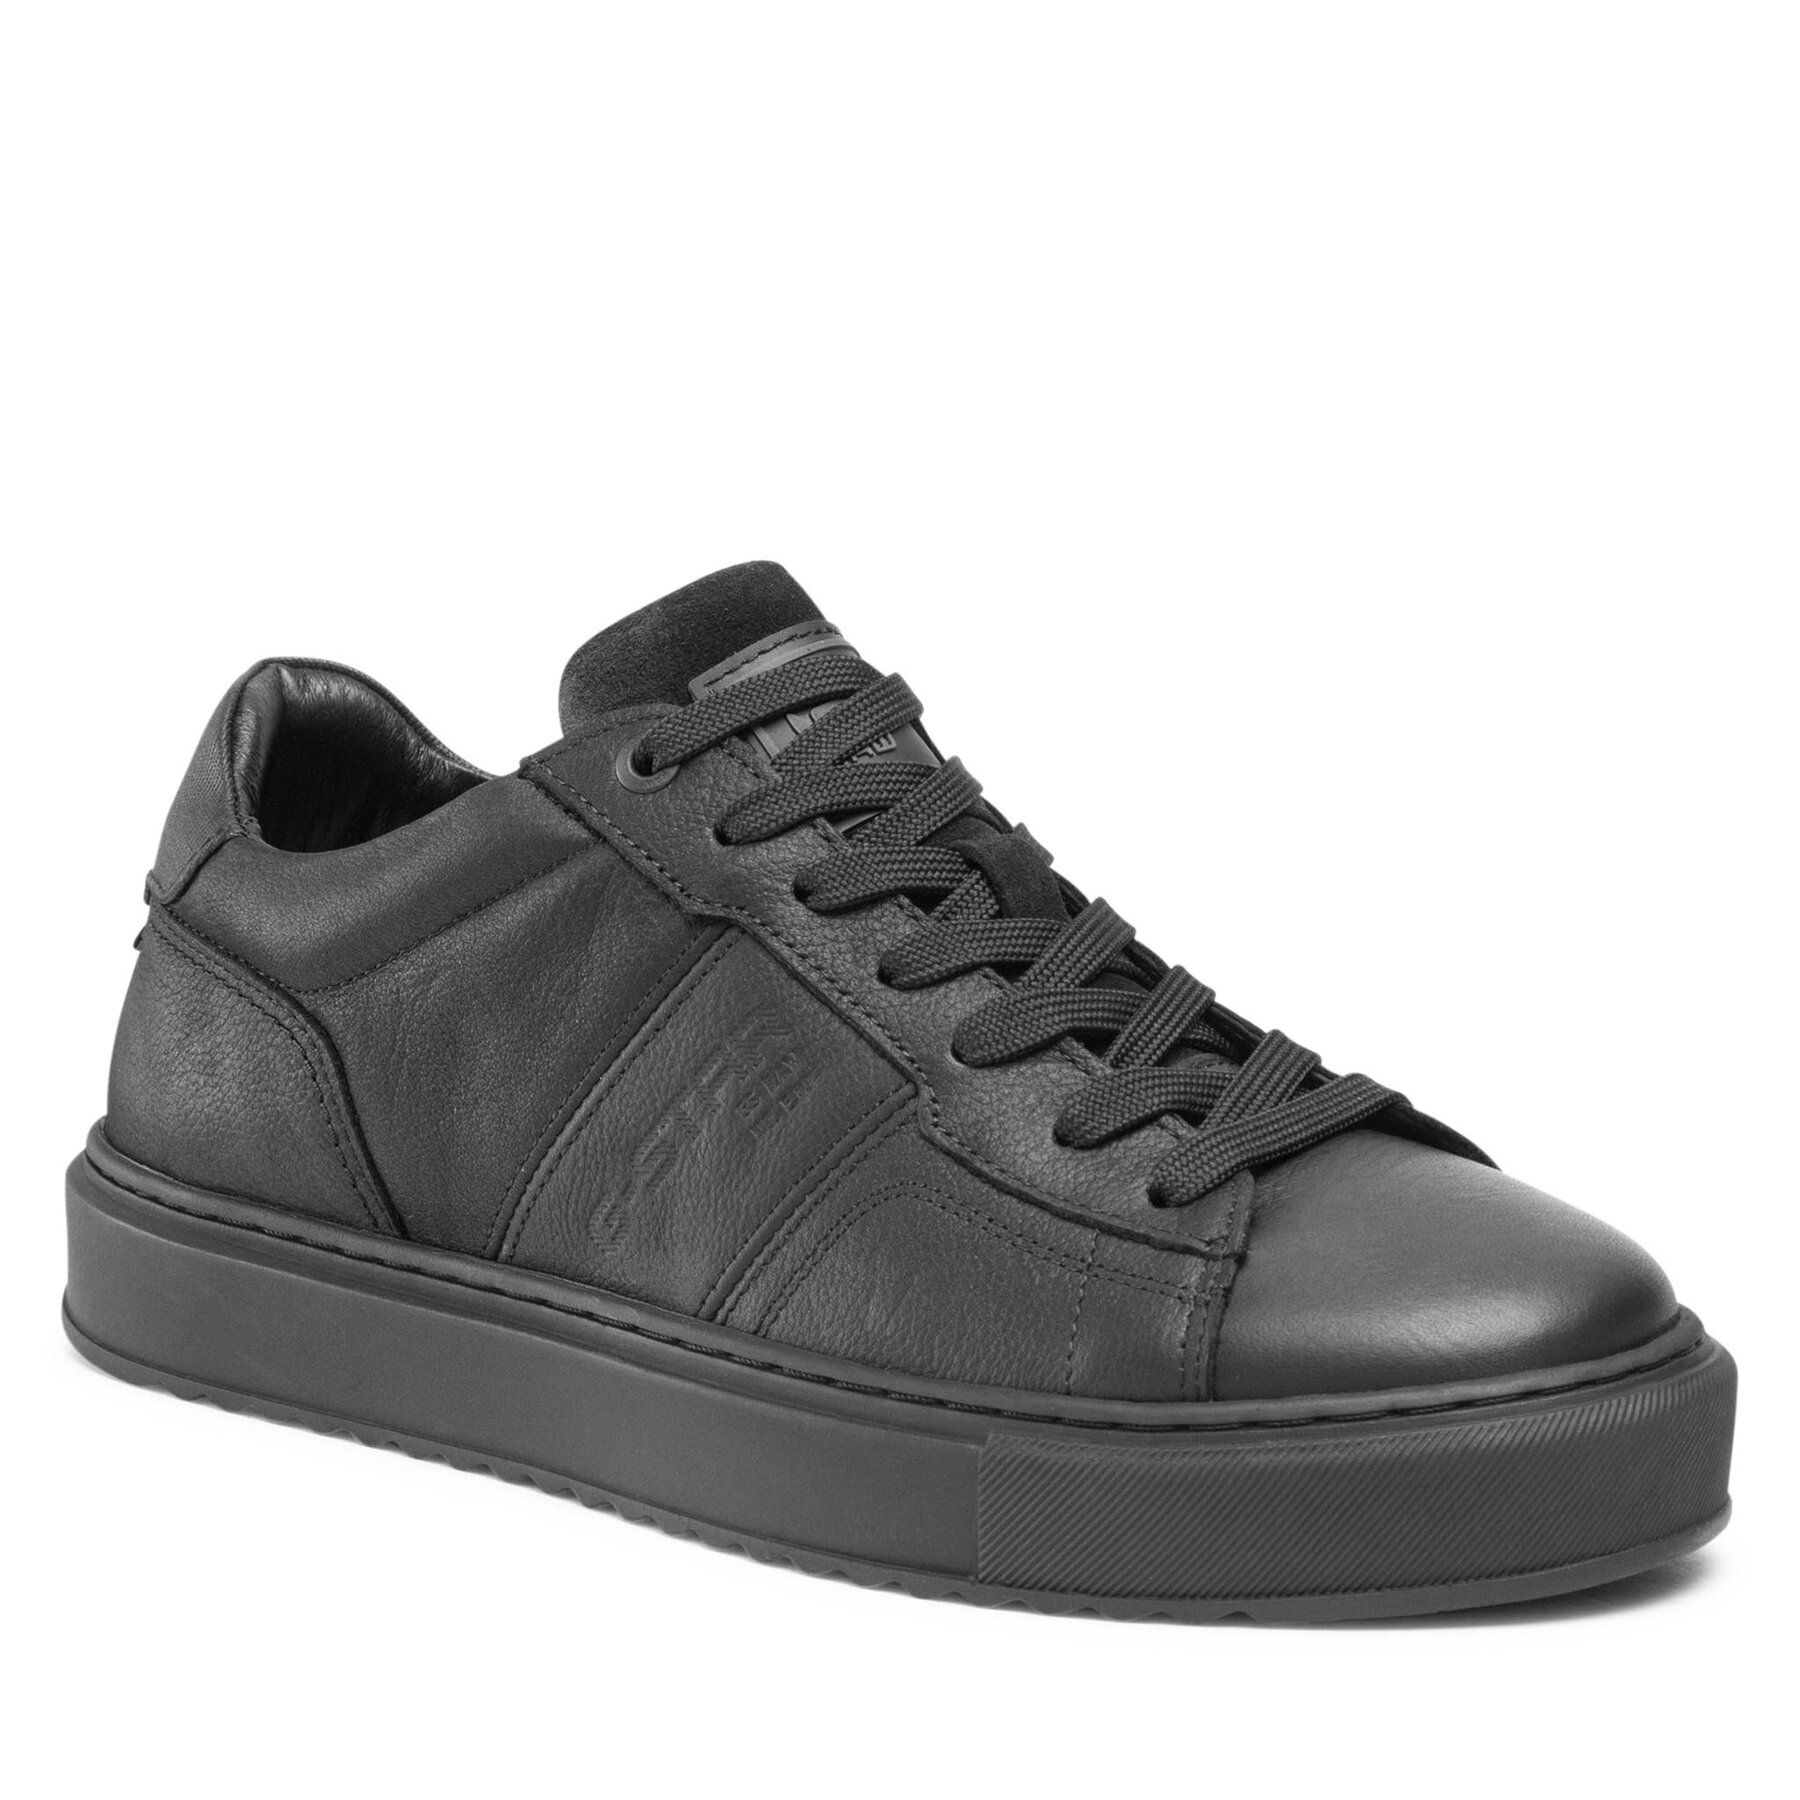 Sneakers G-Star Raw Rocup II Bsc M 2242 007515 Blk/Blk